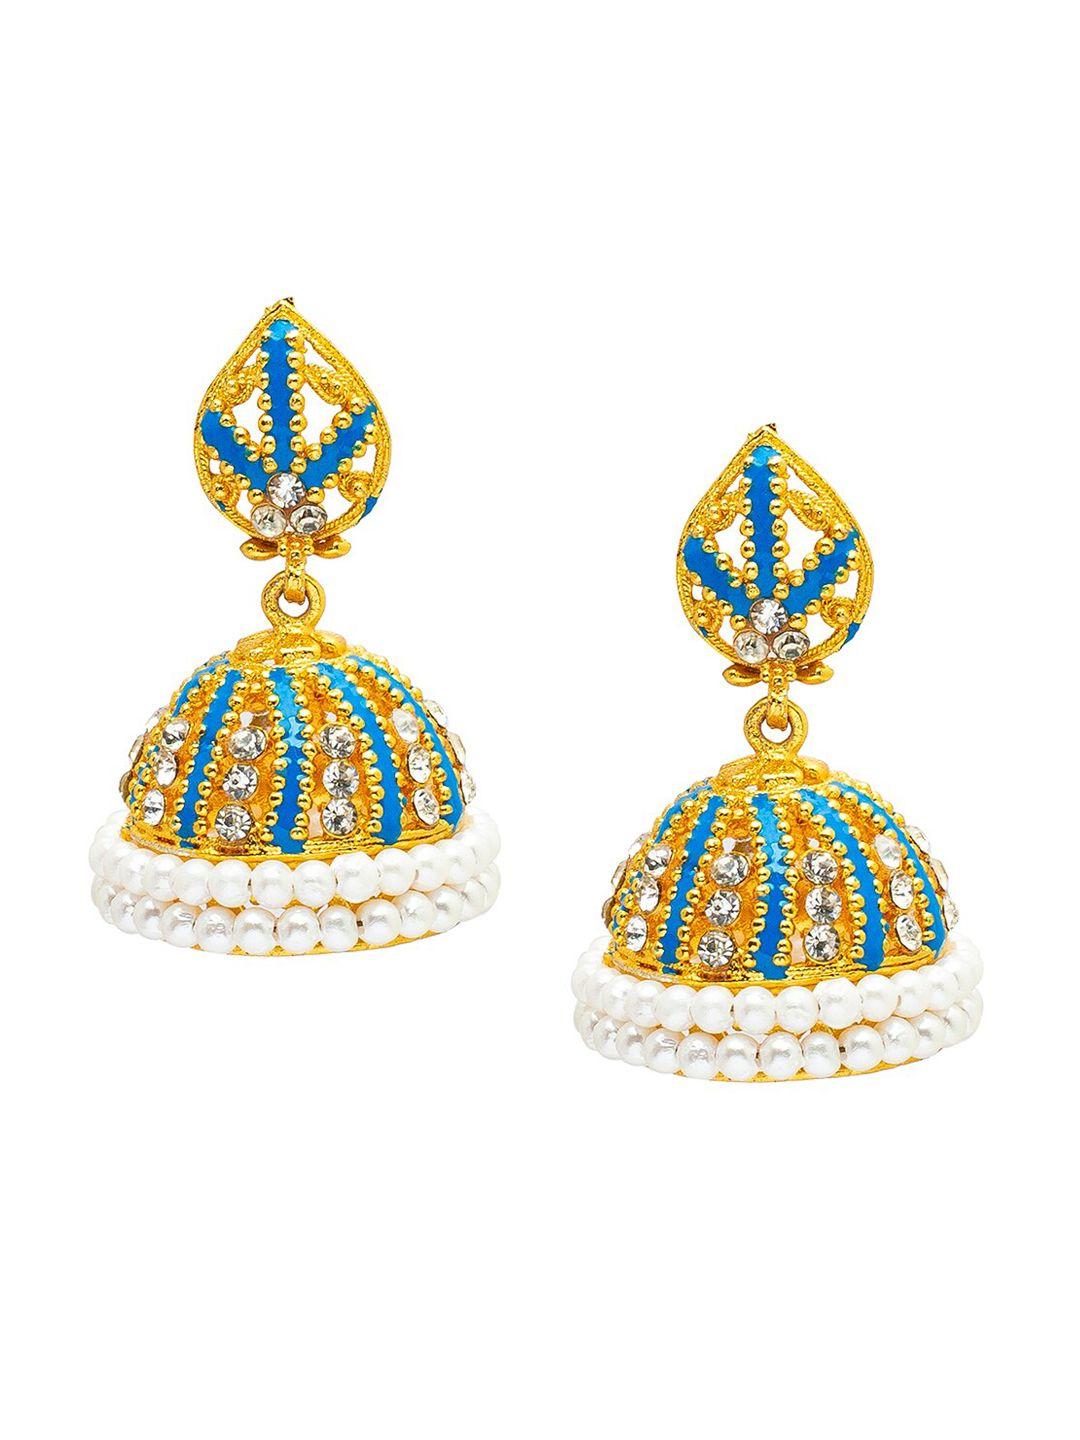 shining jewel - by shivansh gold-toned contemporary jhumkas earrings